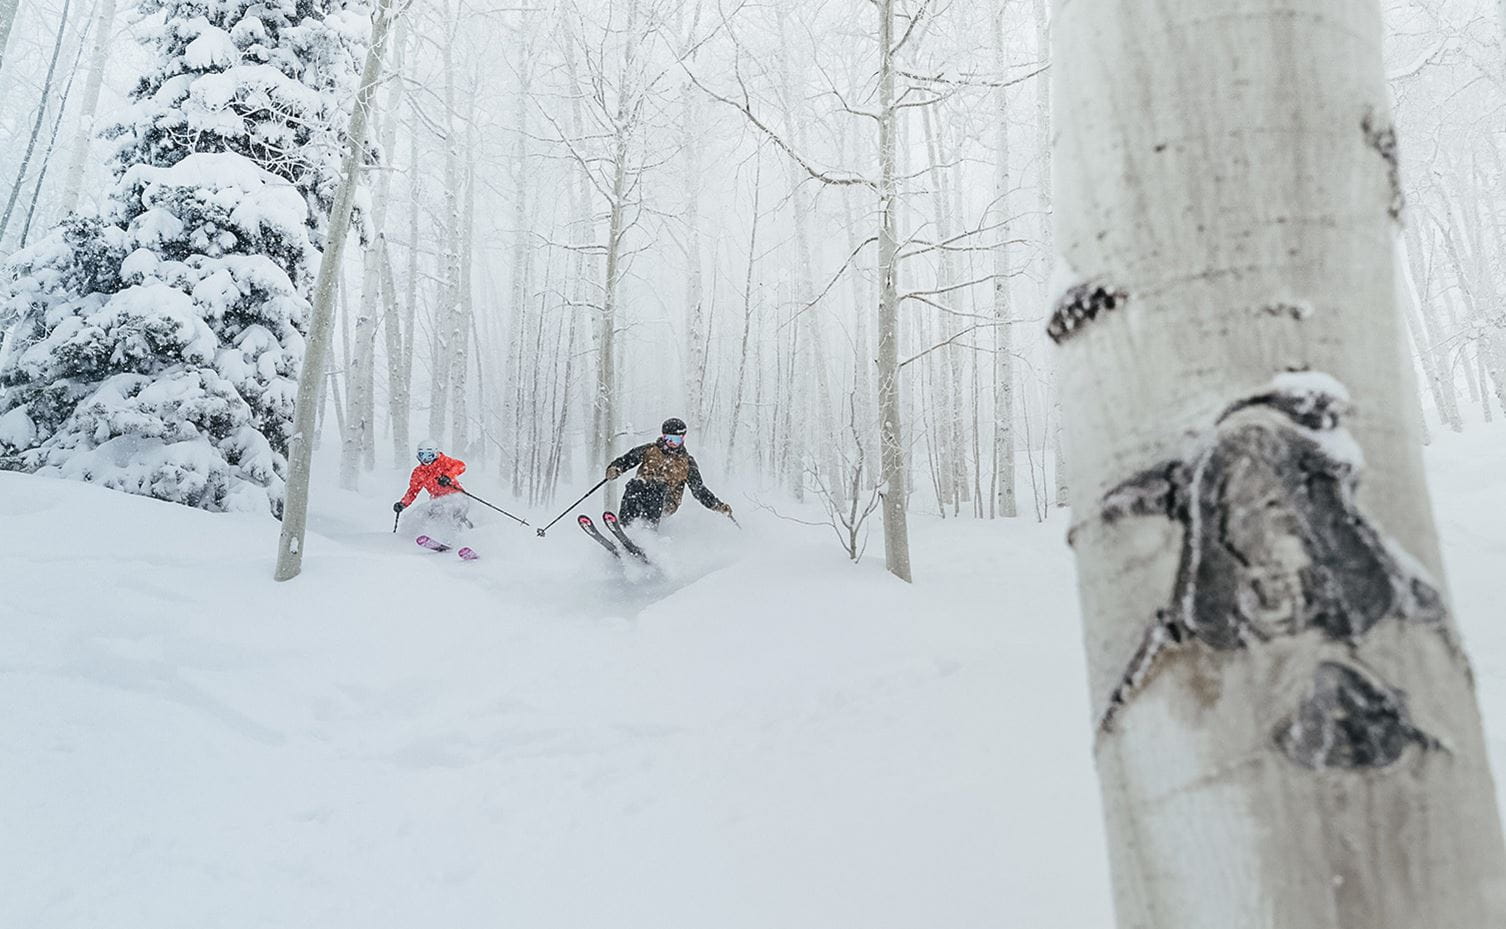 Skiers navigate a snowy run through the trees at Aspen Mountain